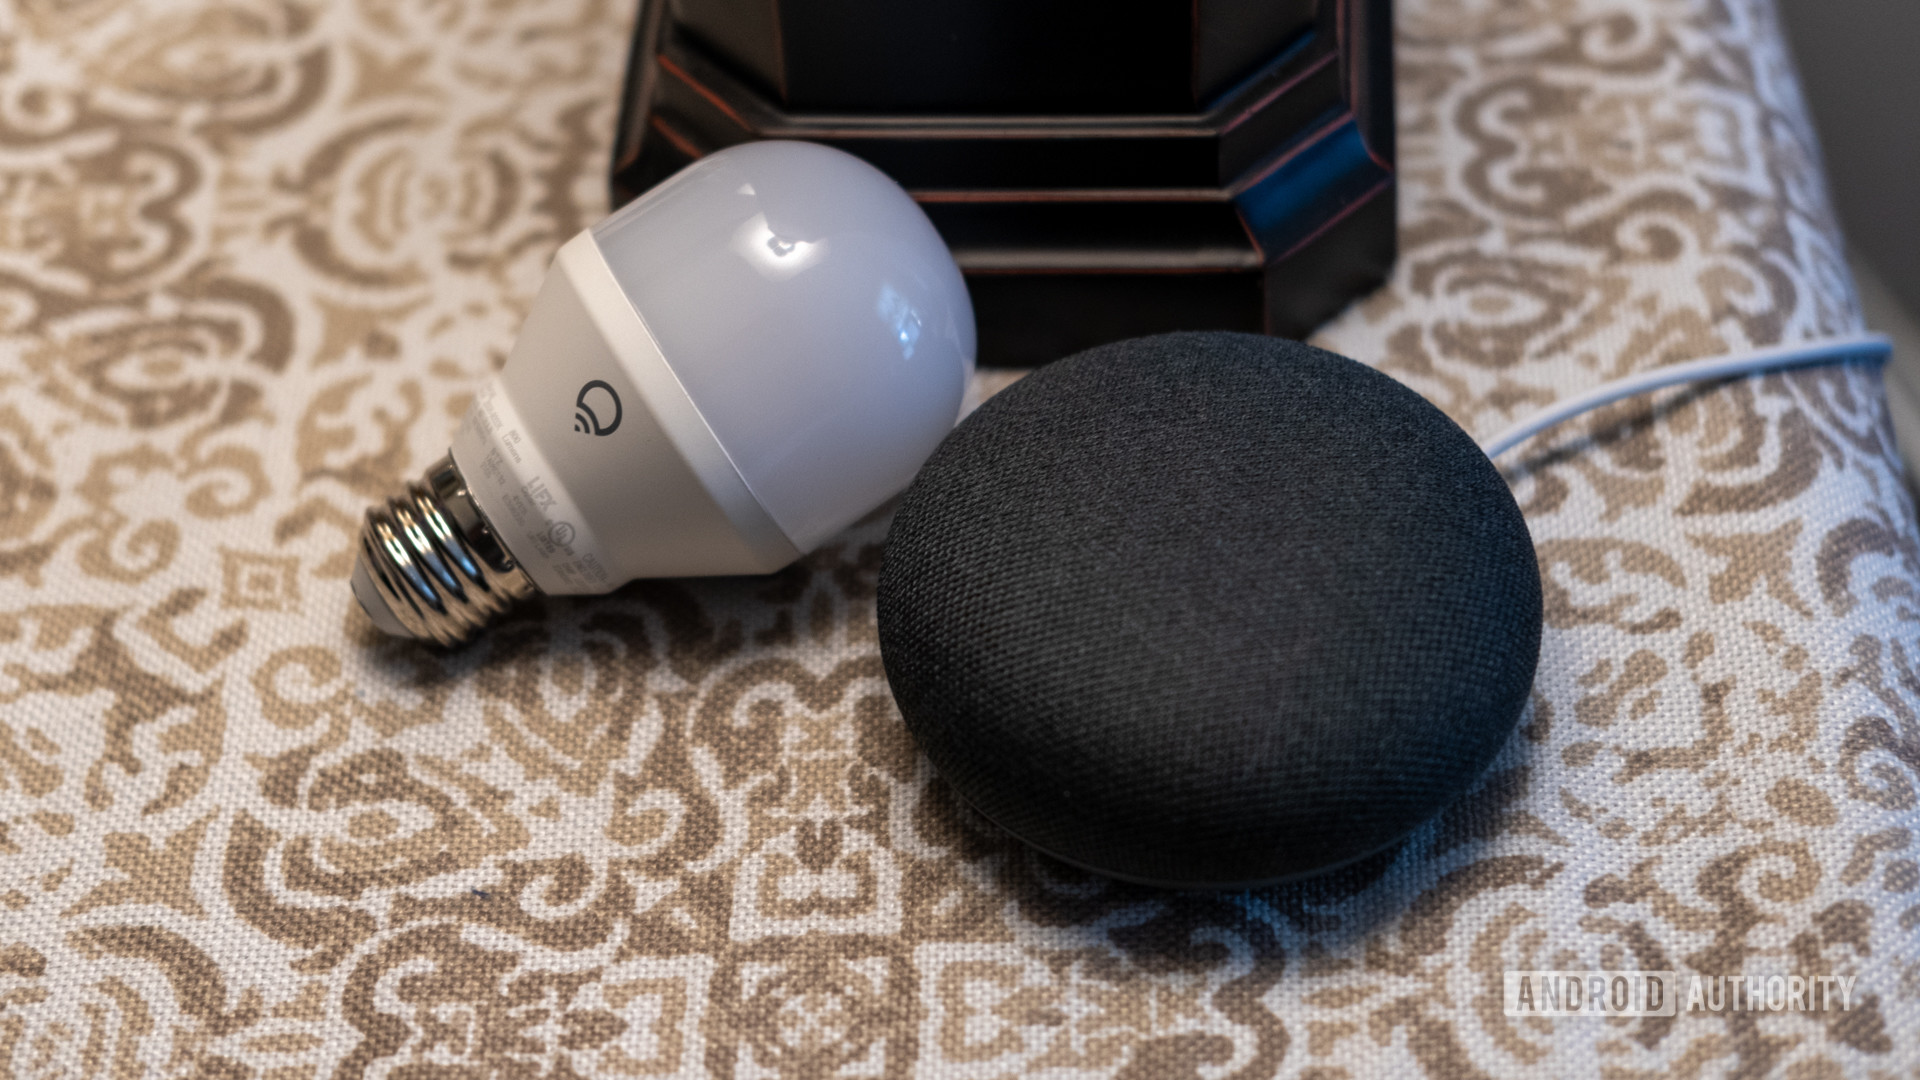 Google nest mini and smart bulb Cyber Monday deals